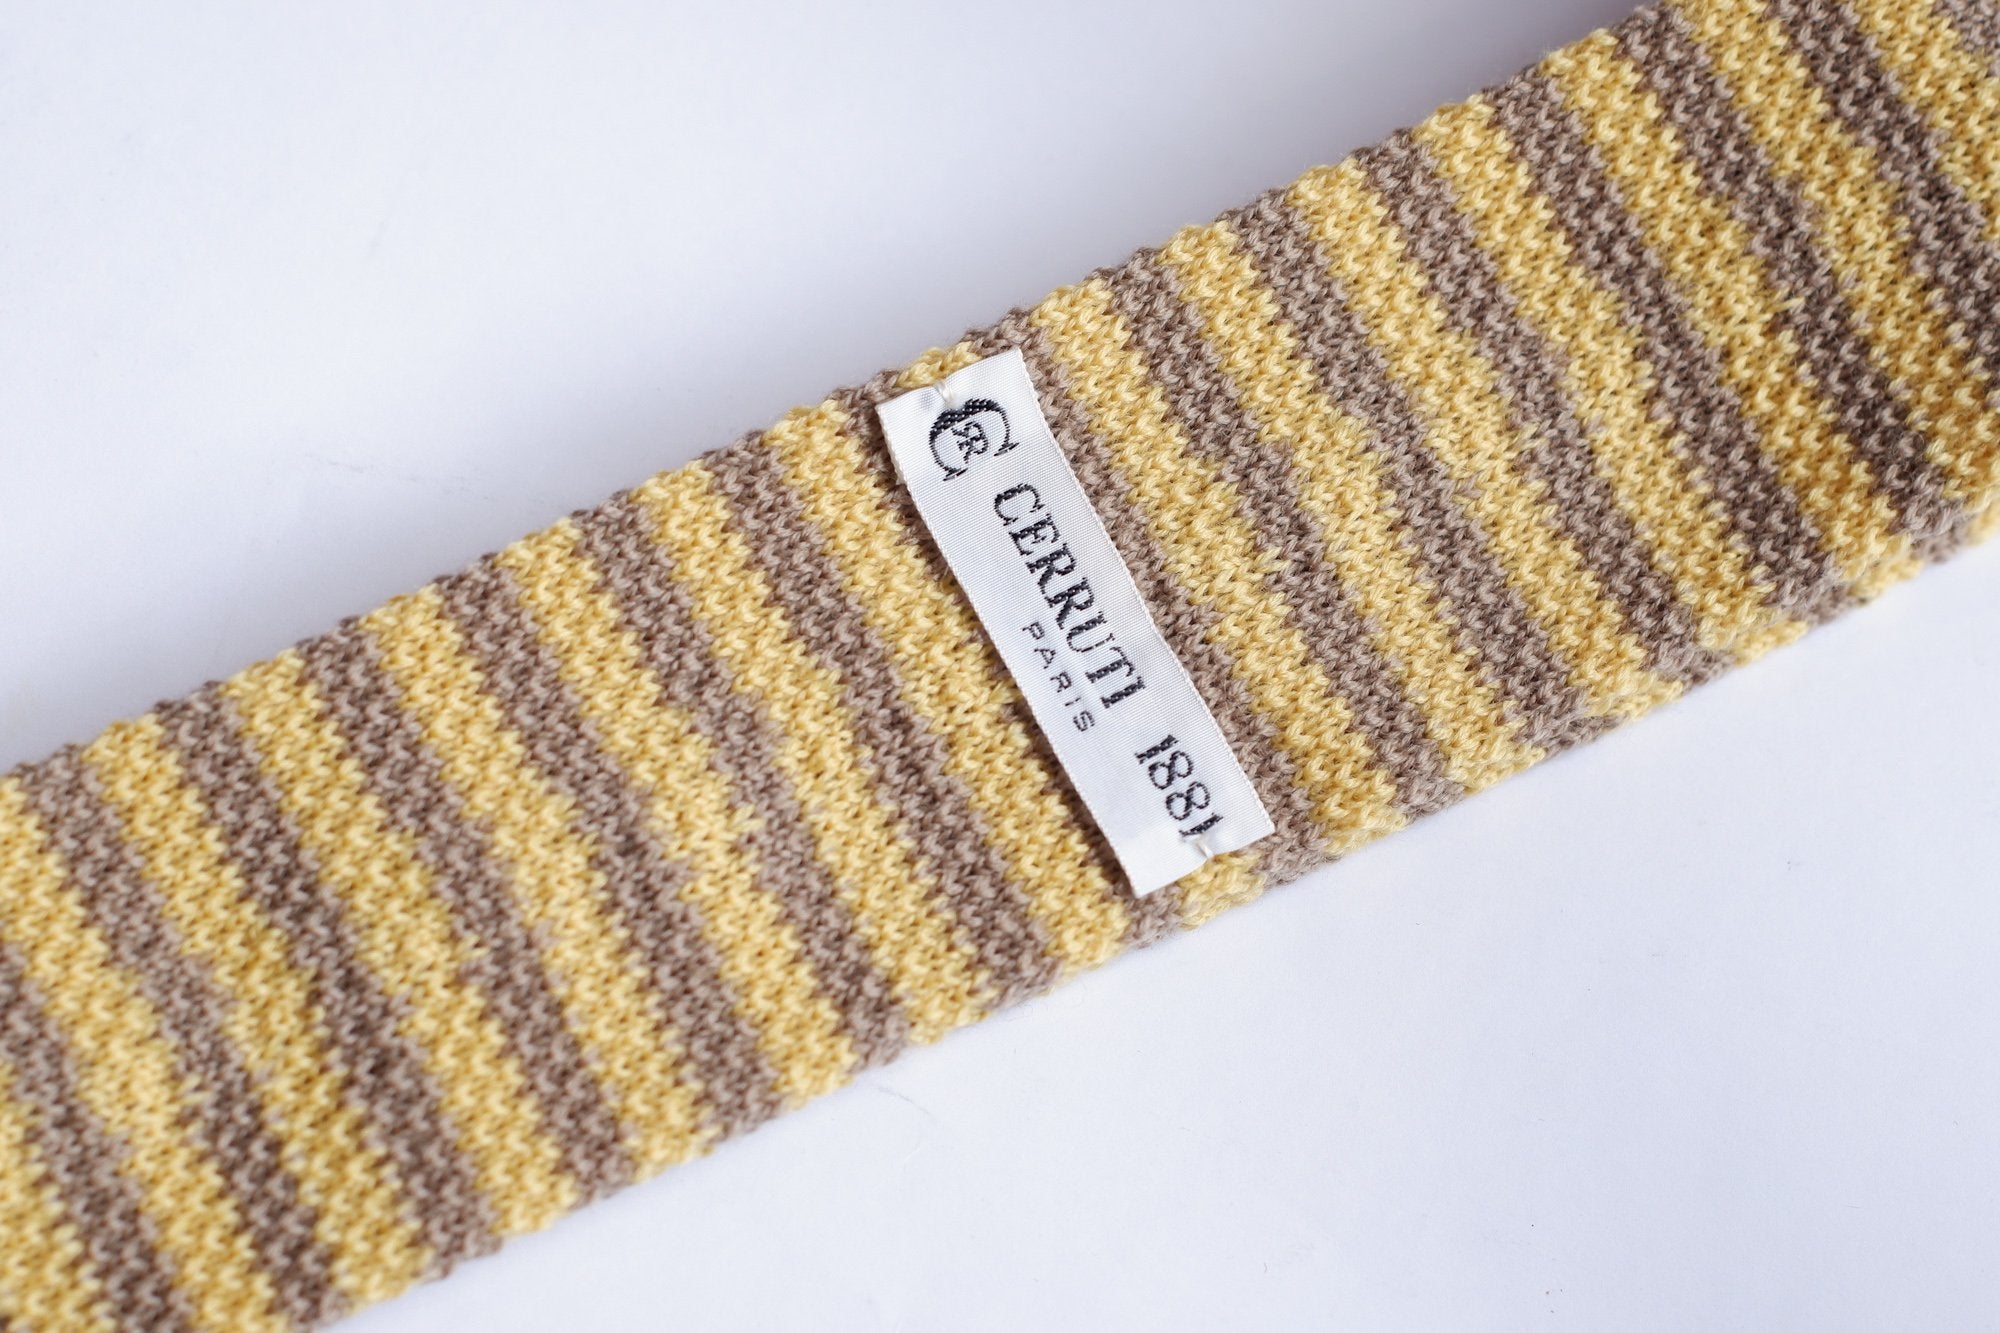 Cerruti 1881 Yellow and Beige Knitted Necktie